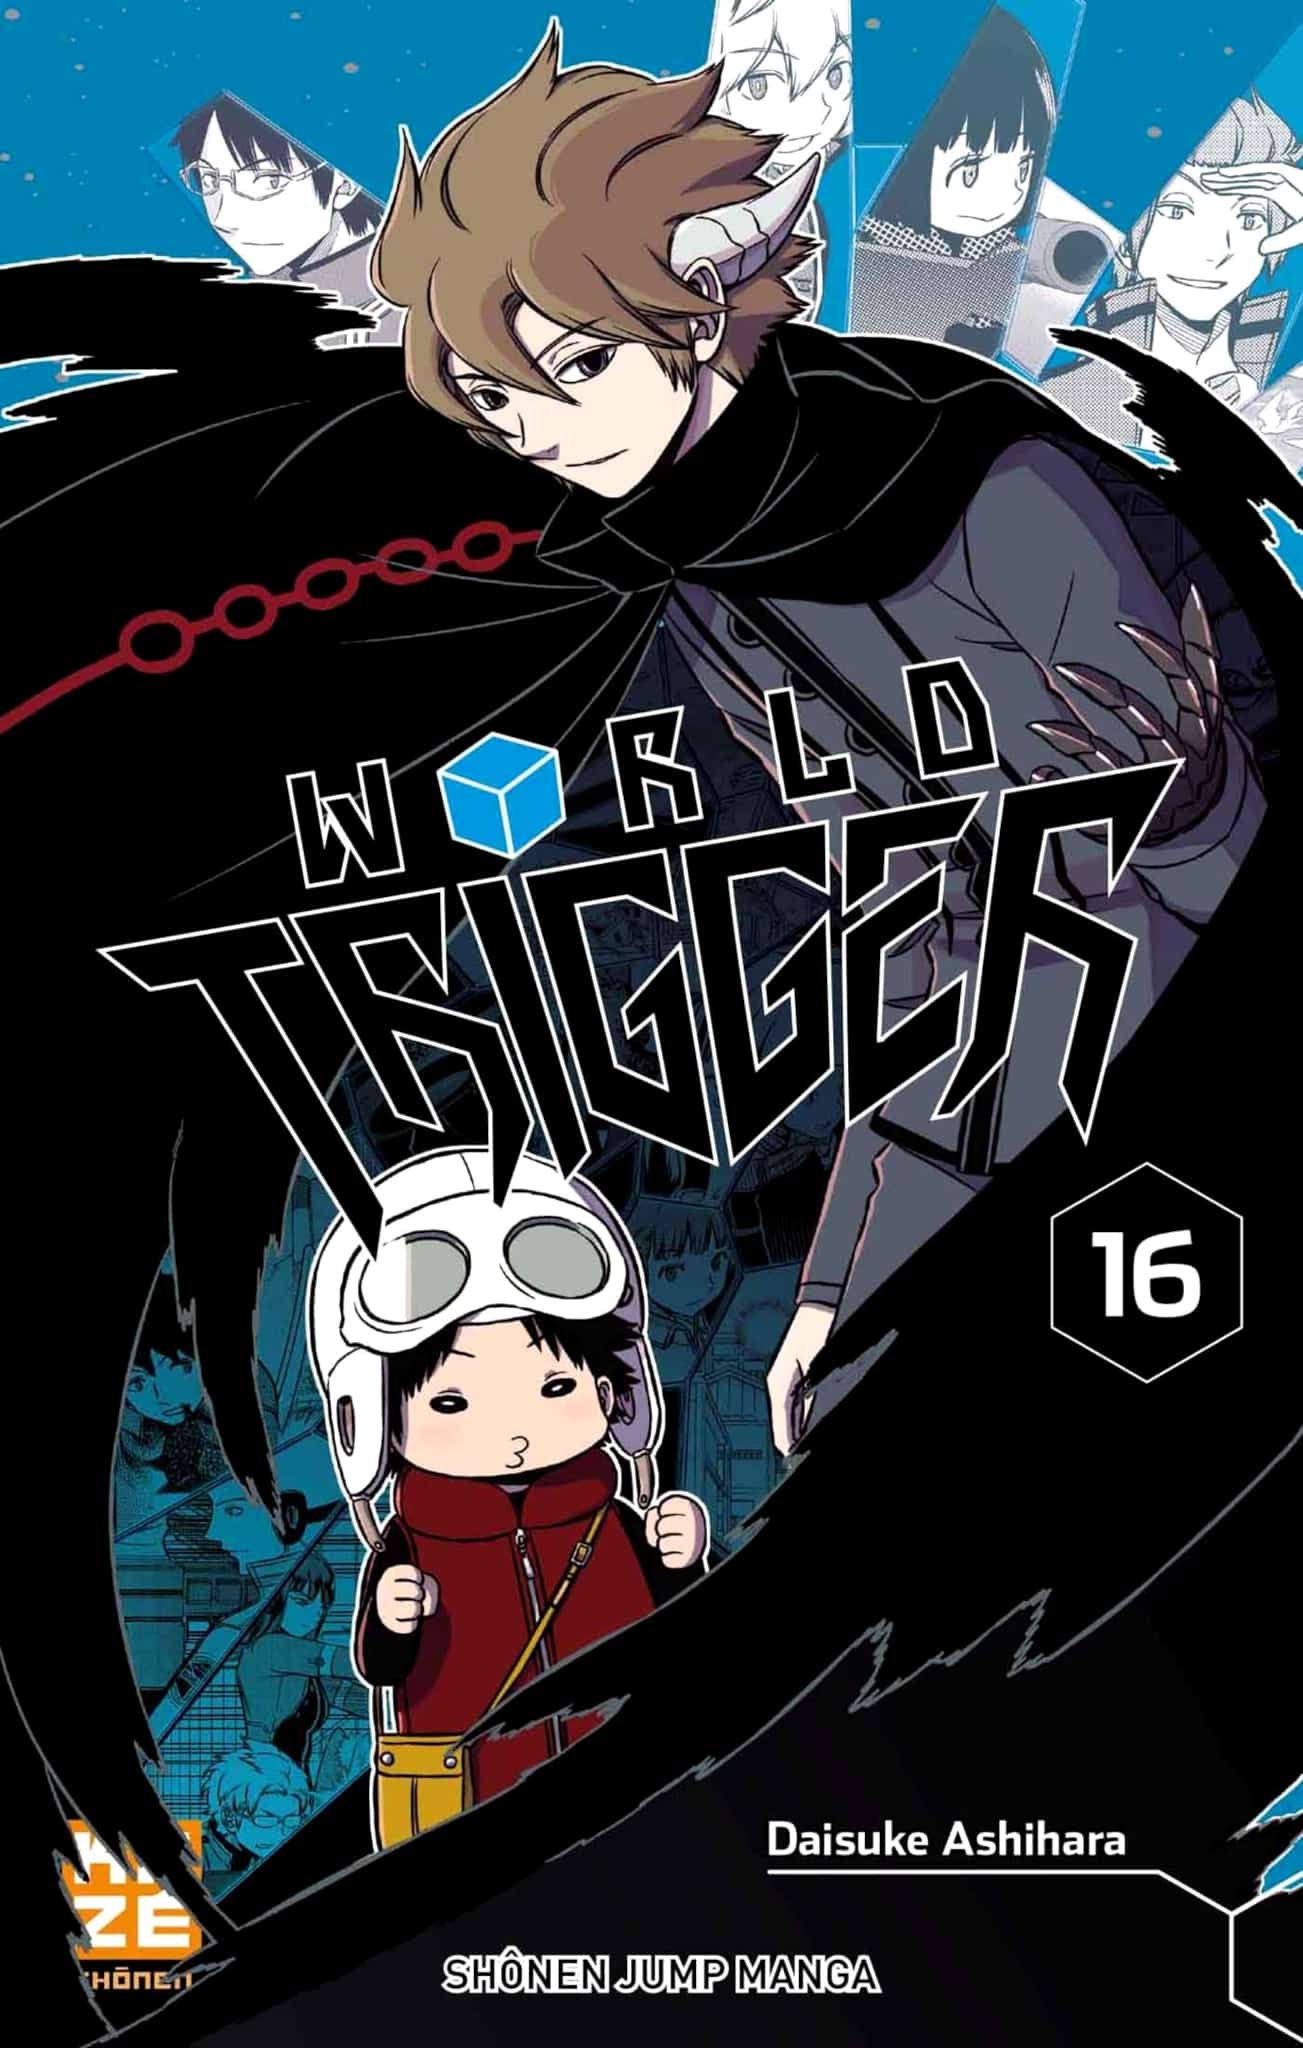 Tome 16 du manga World Trigger